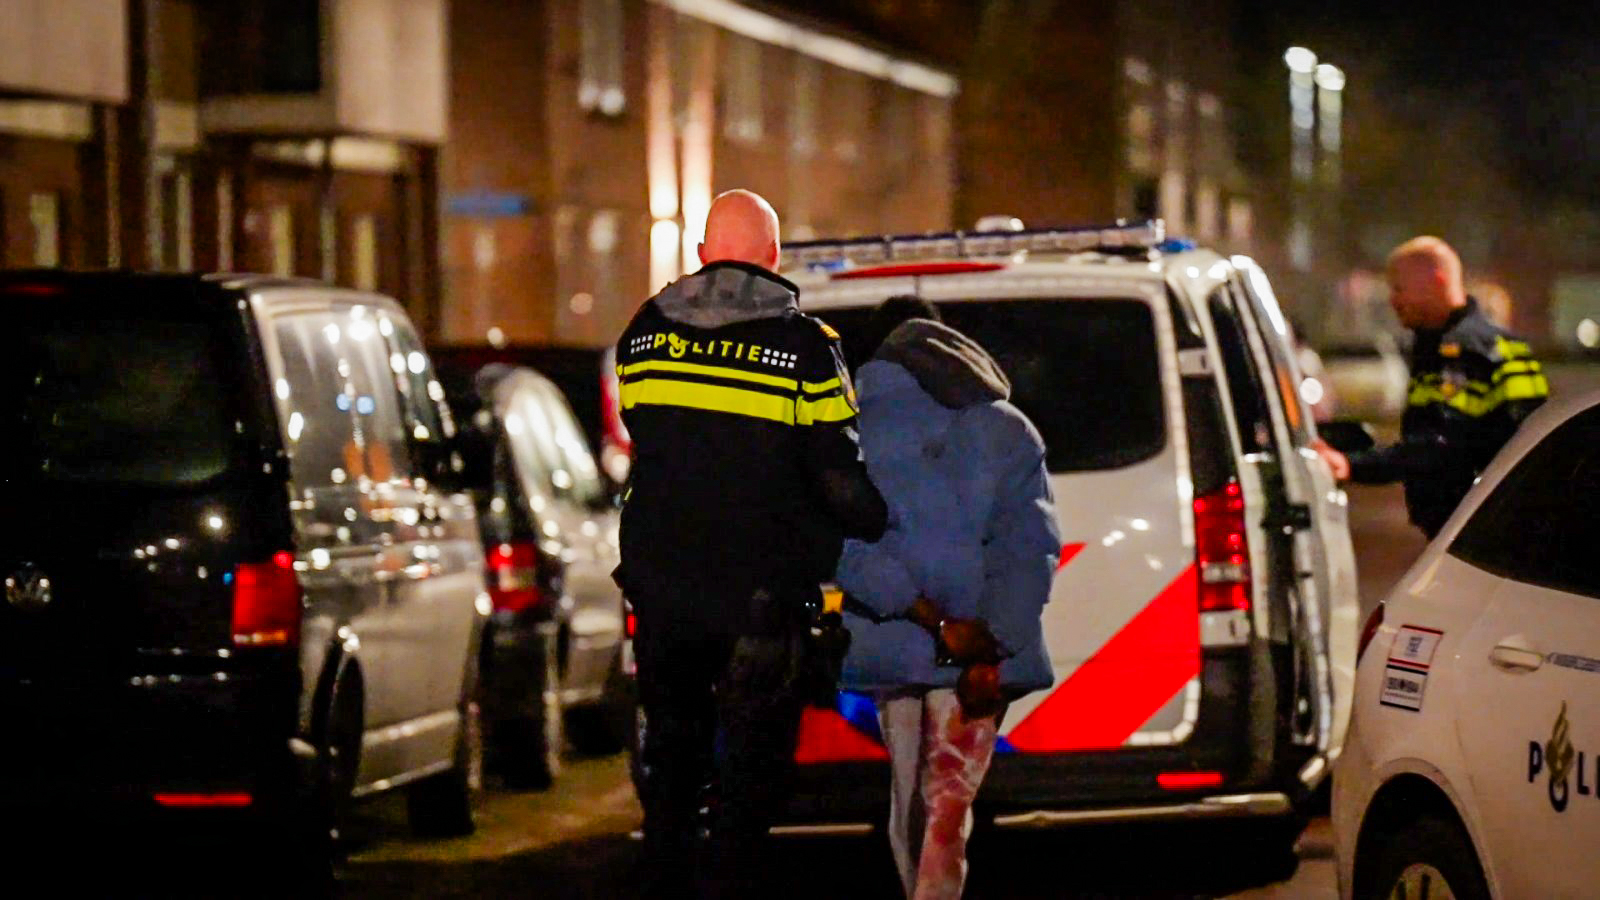 Ernstig steekincident in Arnhem, verdachte onder bloed aangehouden